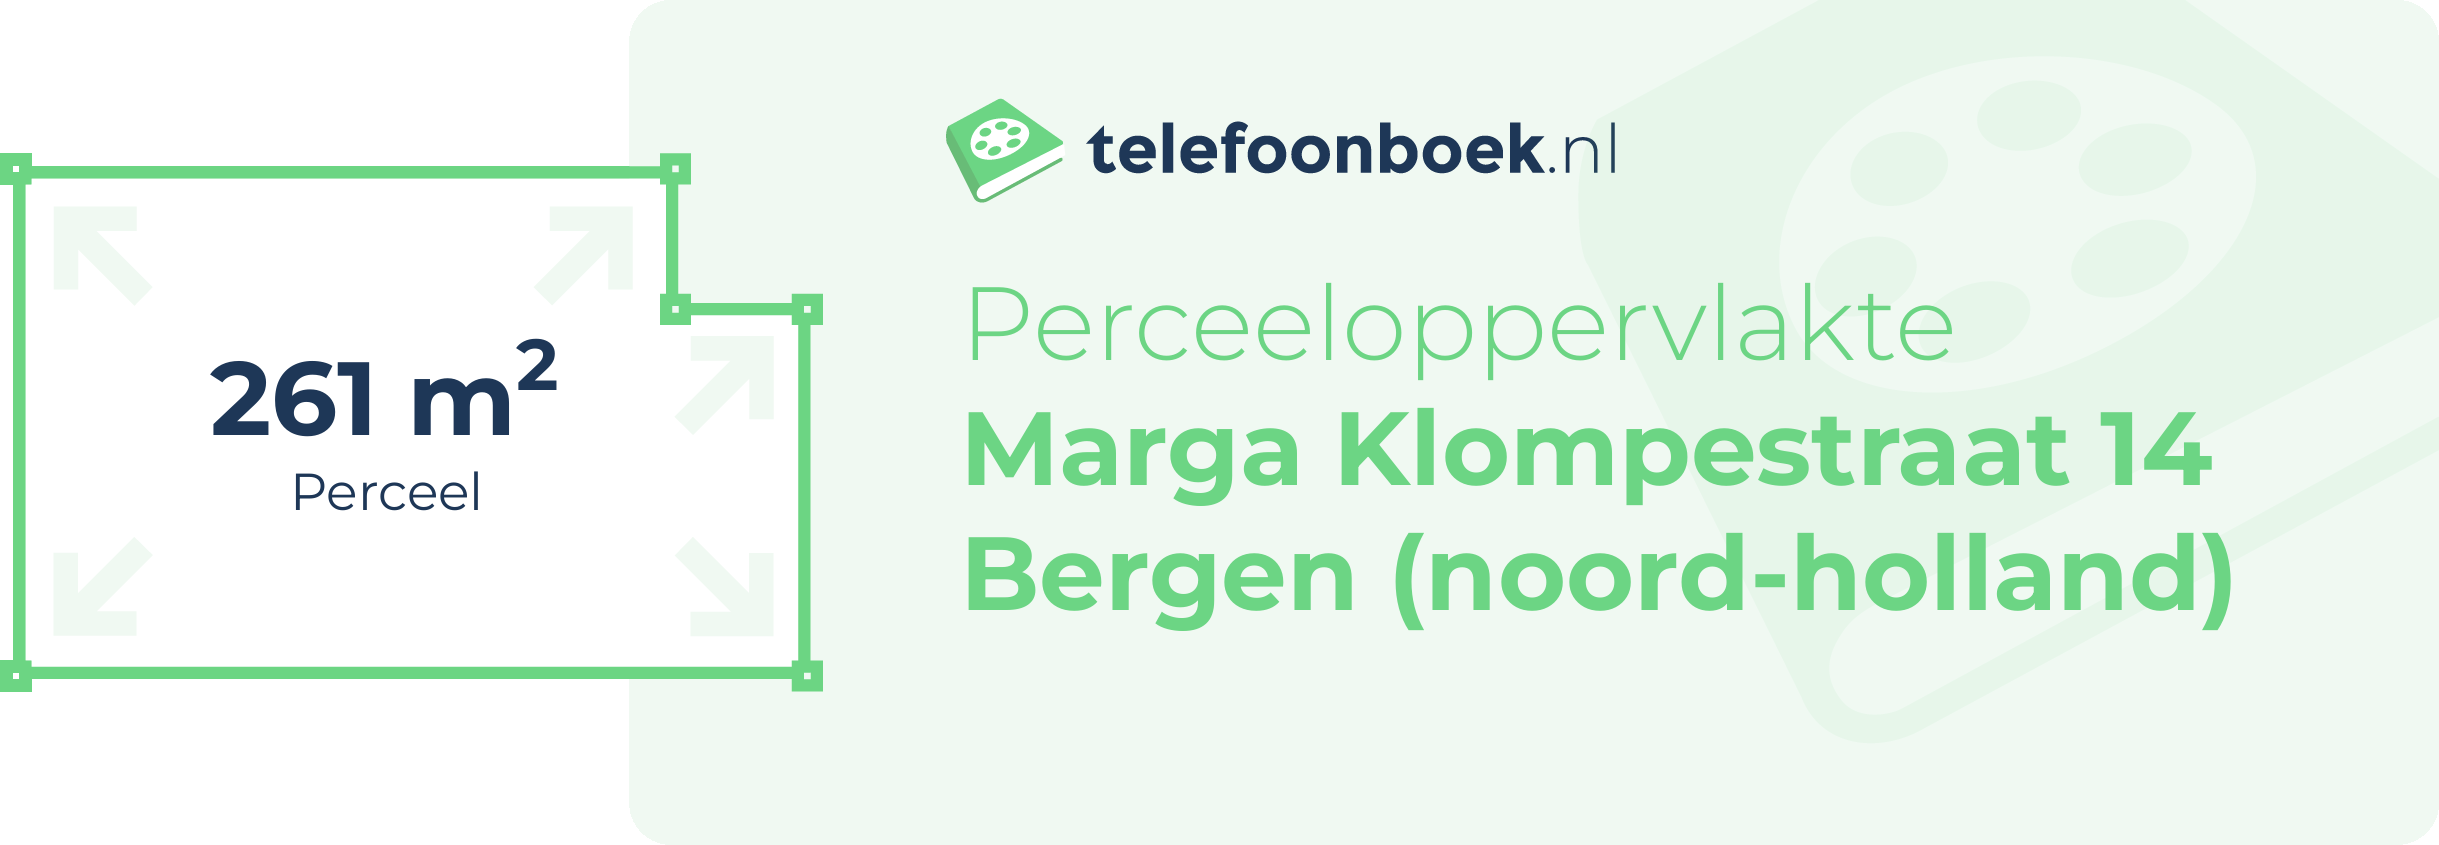 Perceeloppervlakte Marga Klompestraat 14 Bergen (Noord-Holland)